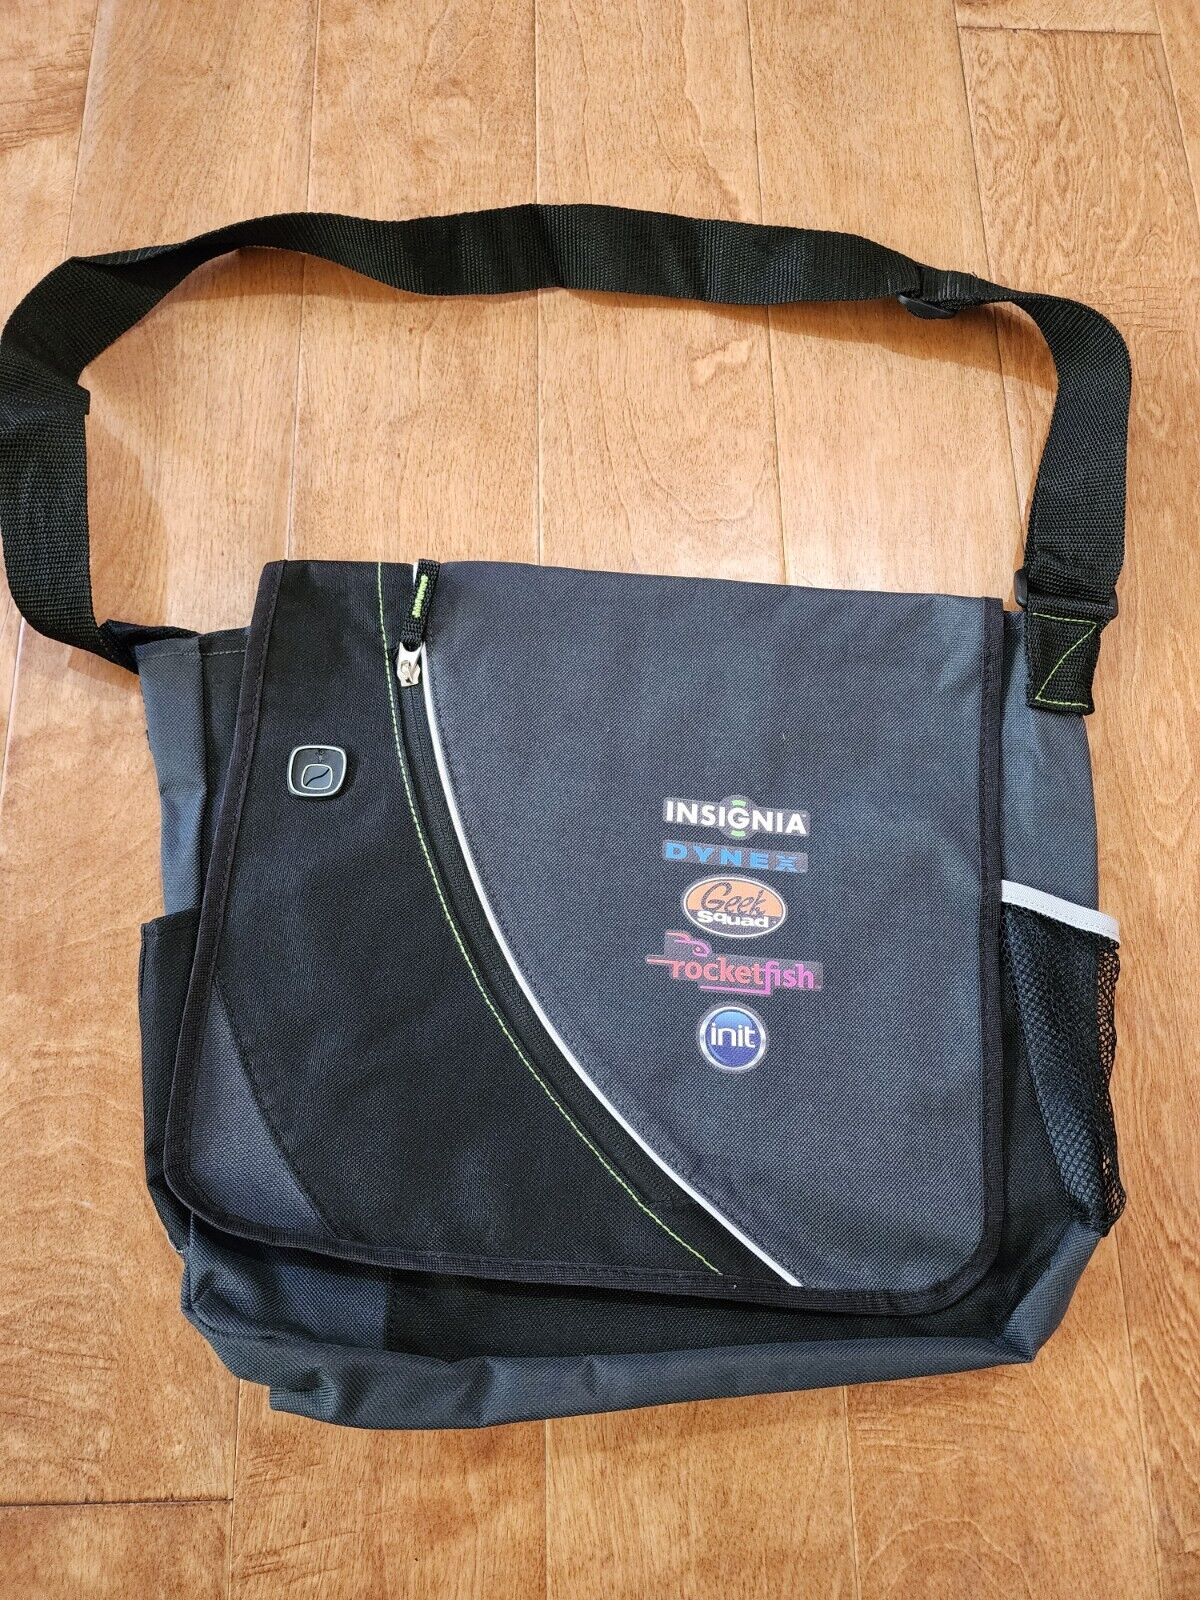 Best Buy Brands Messenger bag. Insignia/Dynex/Geek Squad/Rocketfish/Init